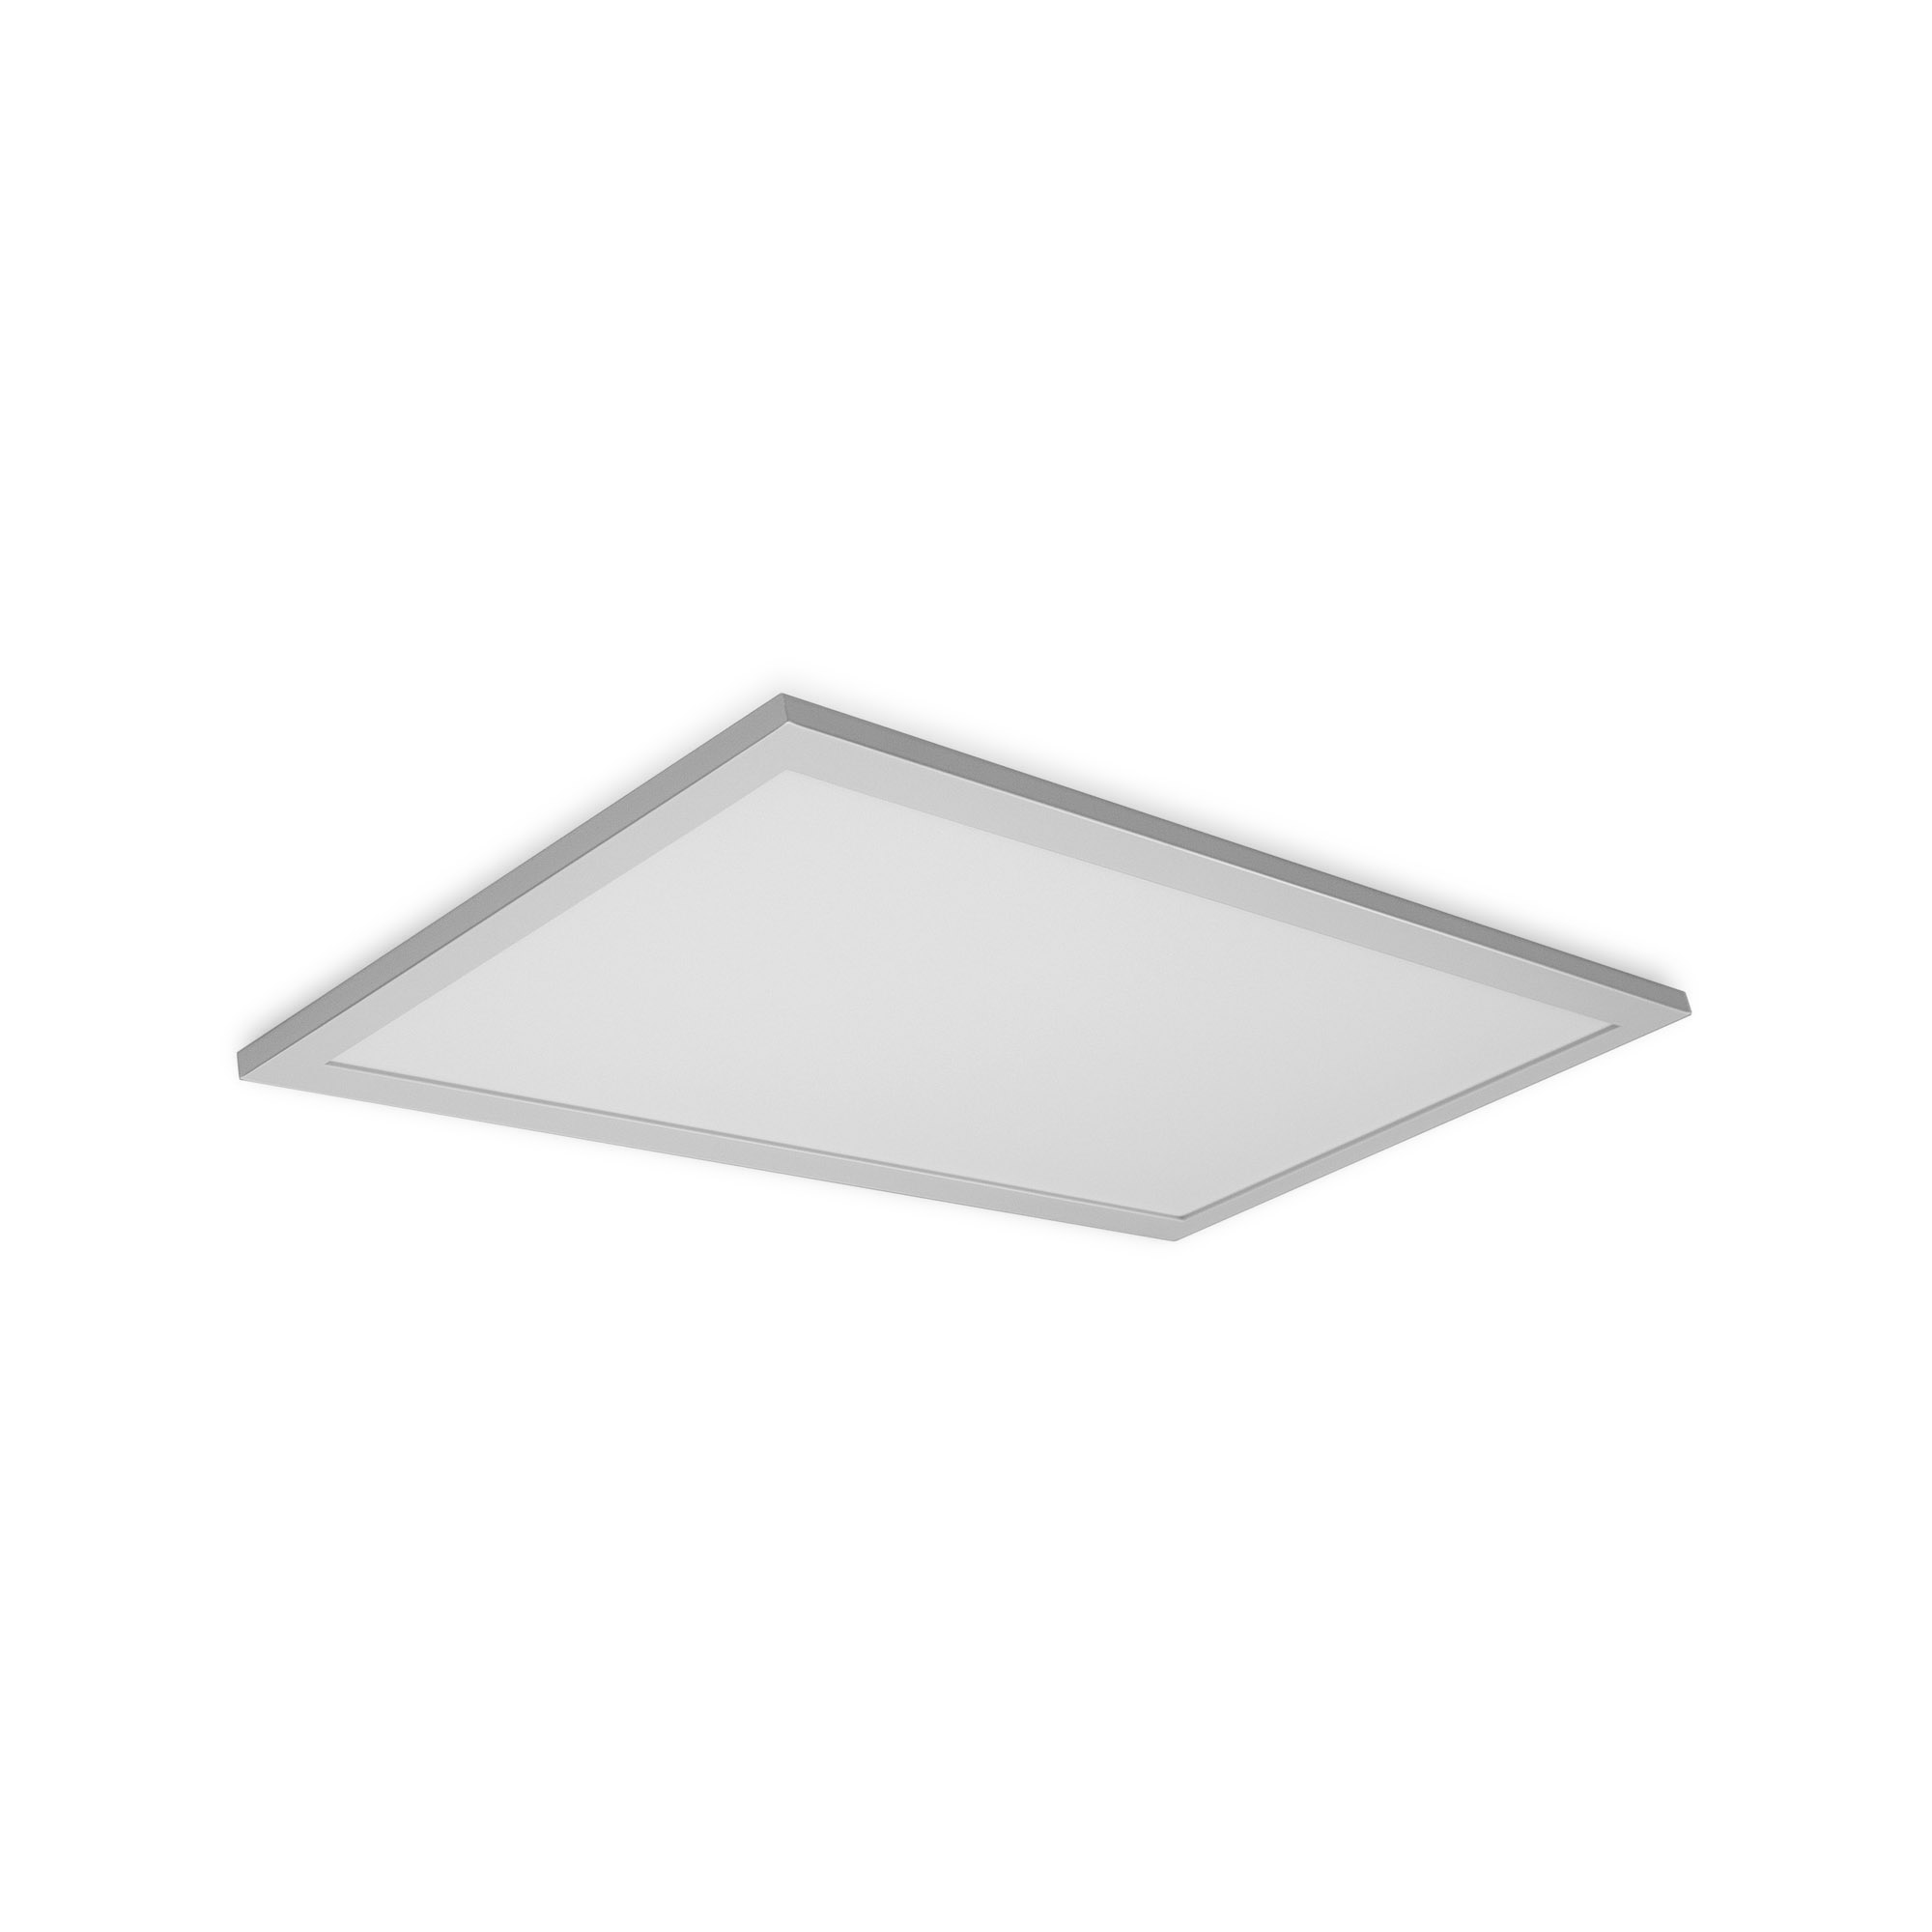 Plafoniera panou LED LEDVANCE SMART+ WiFi Tunable White LED Panel PLANON PLUS 60x30cm 1600lm